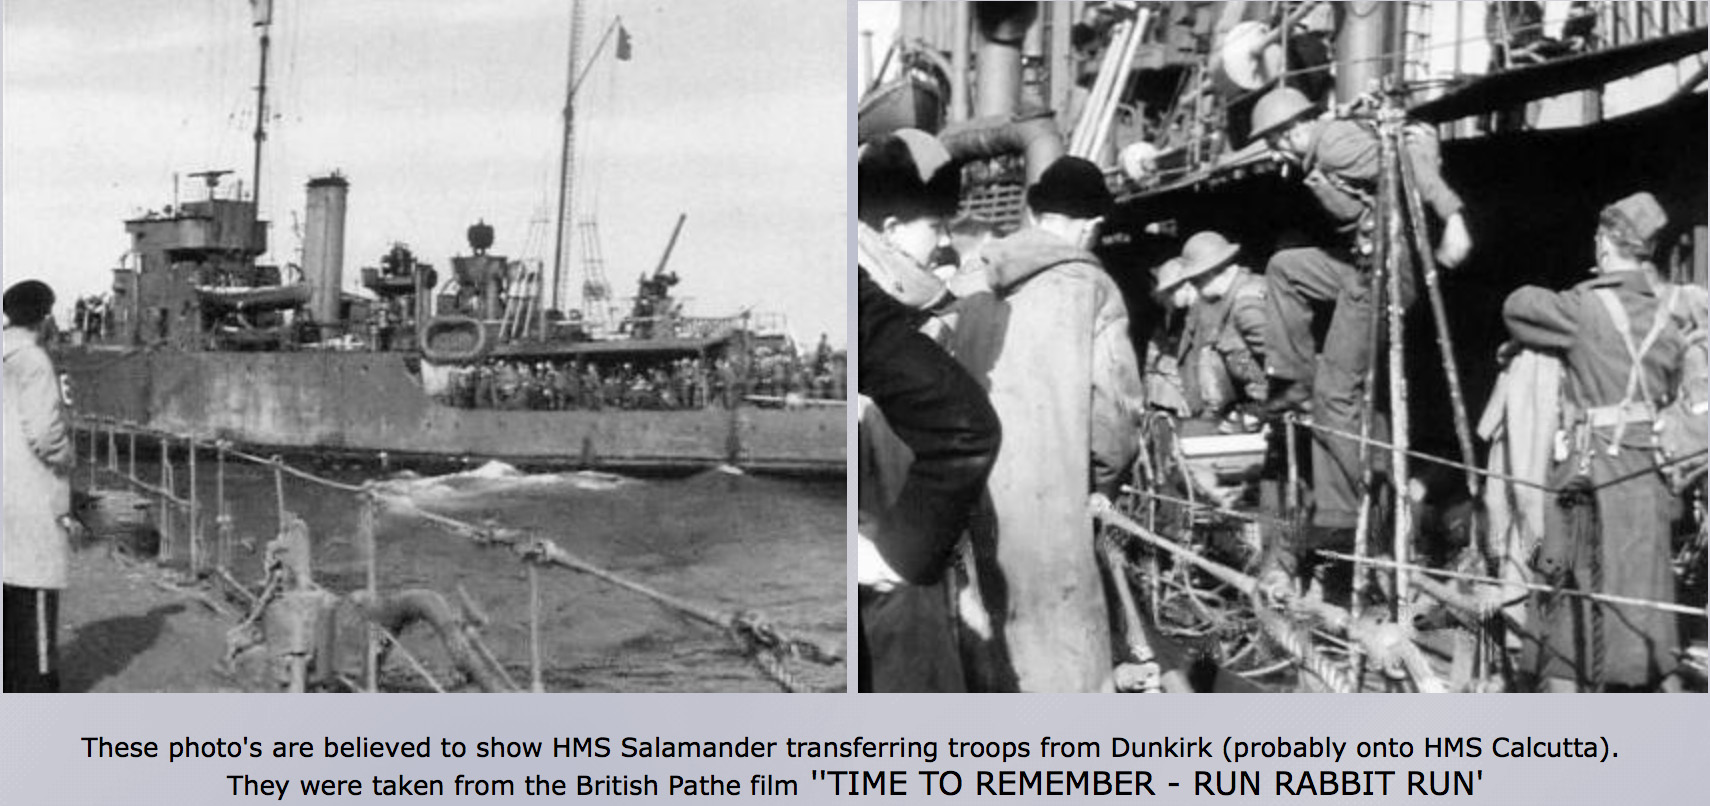 Troops transferring to HMS Calcutta